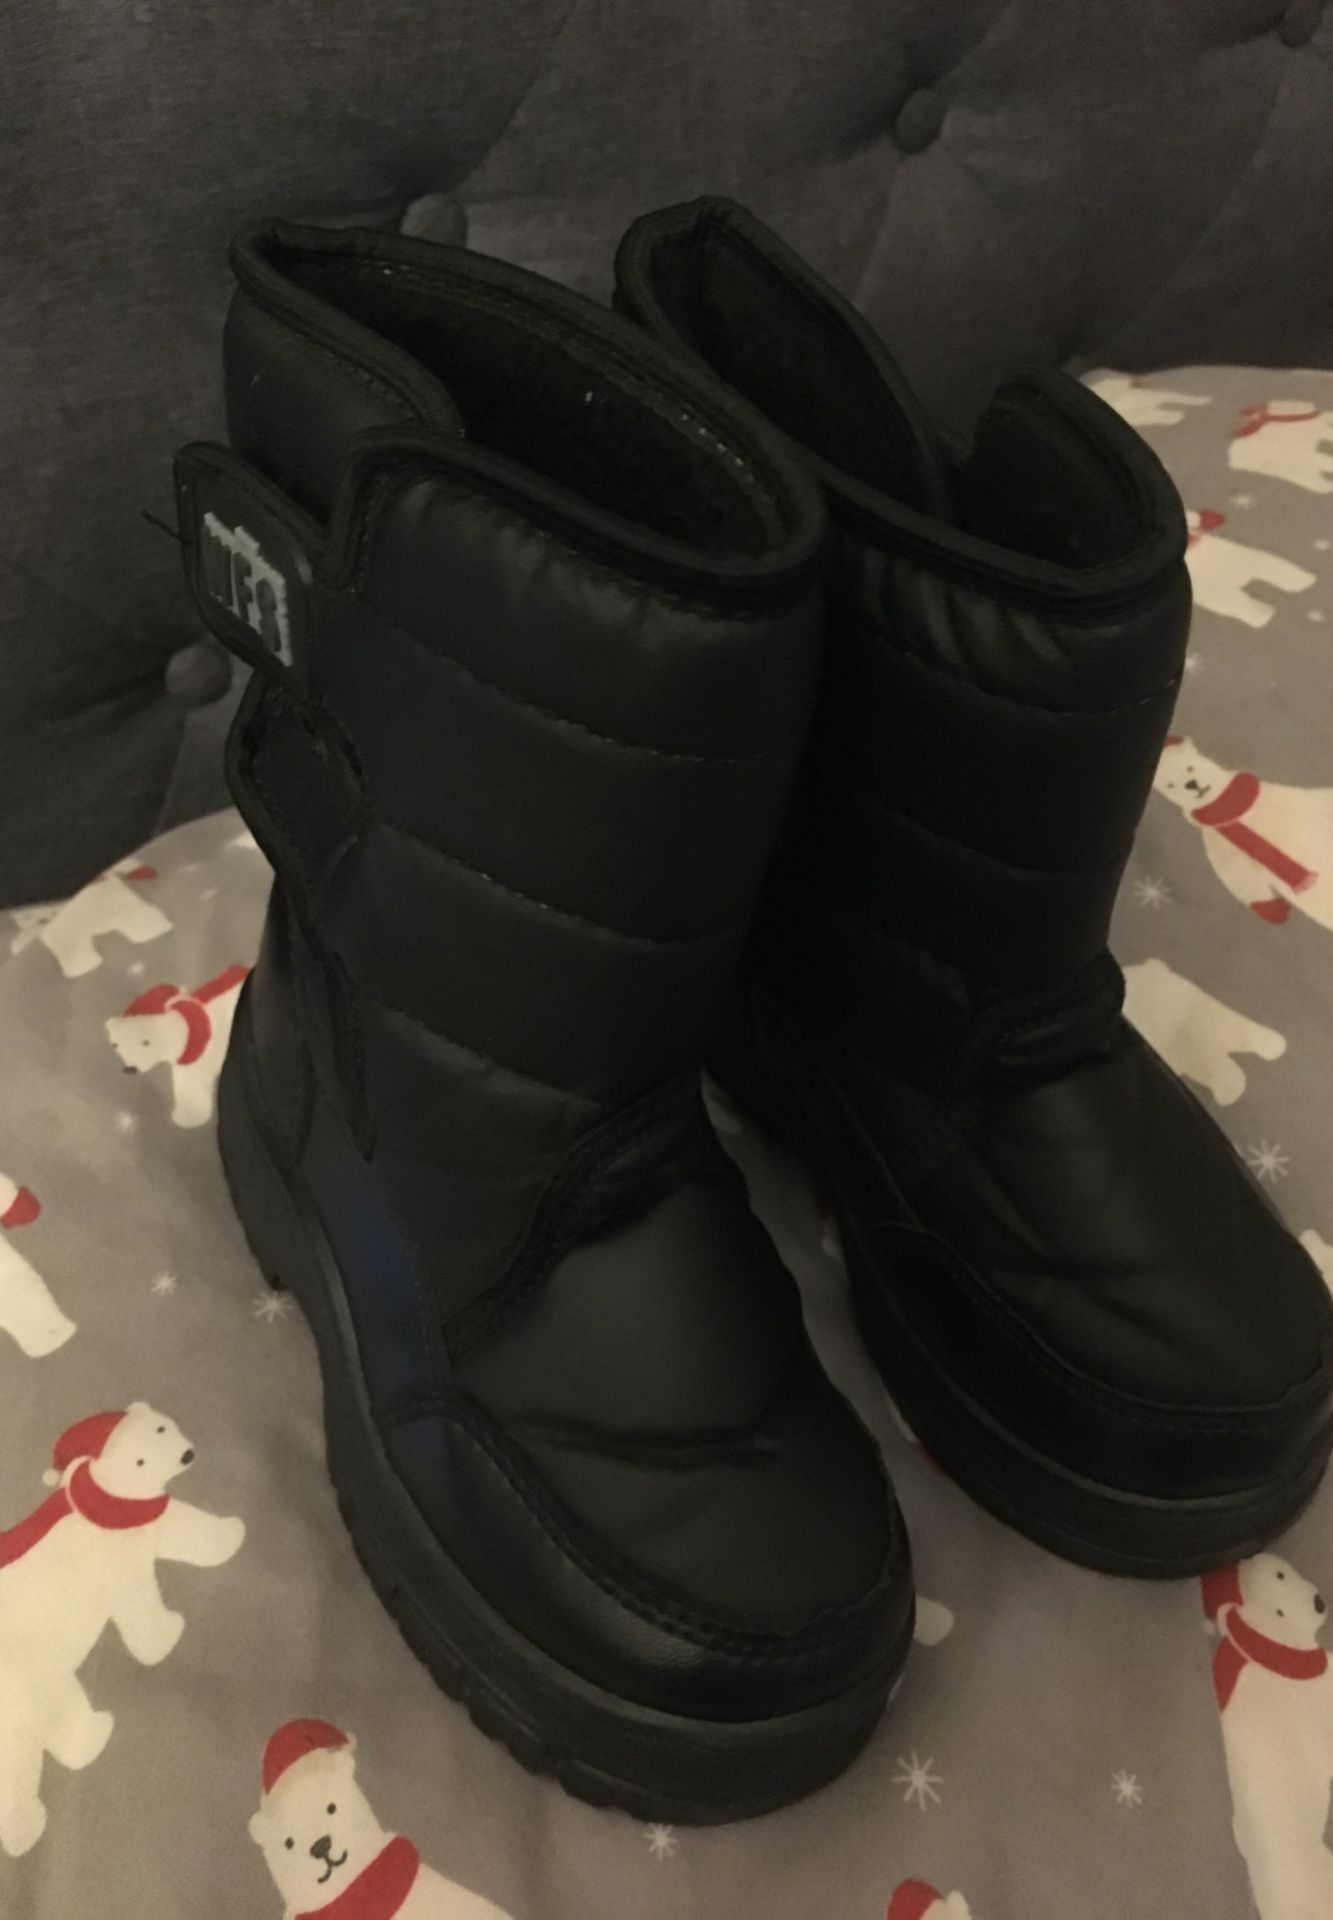 Boy snow boots